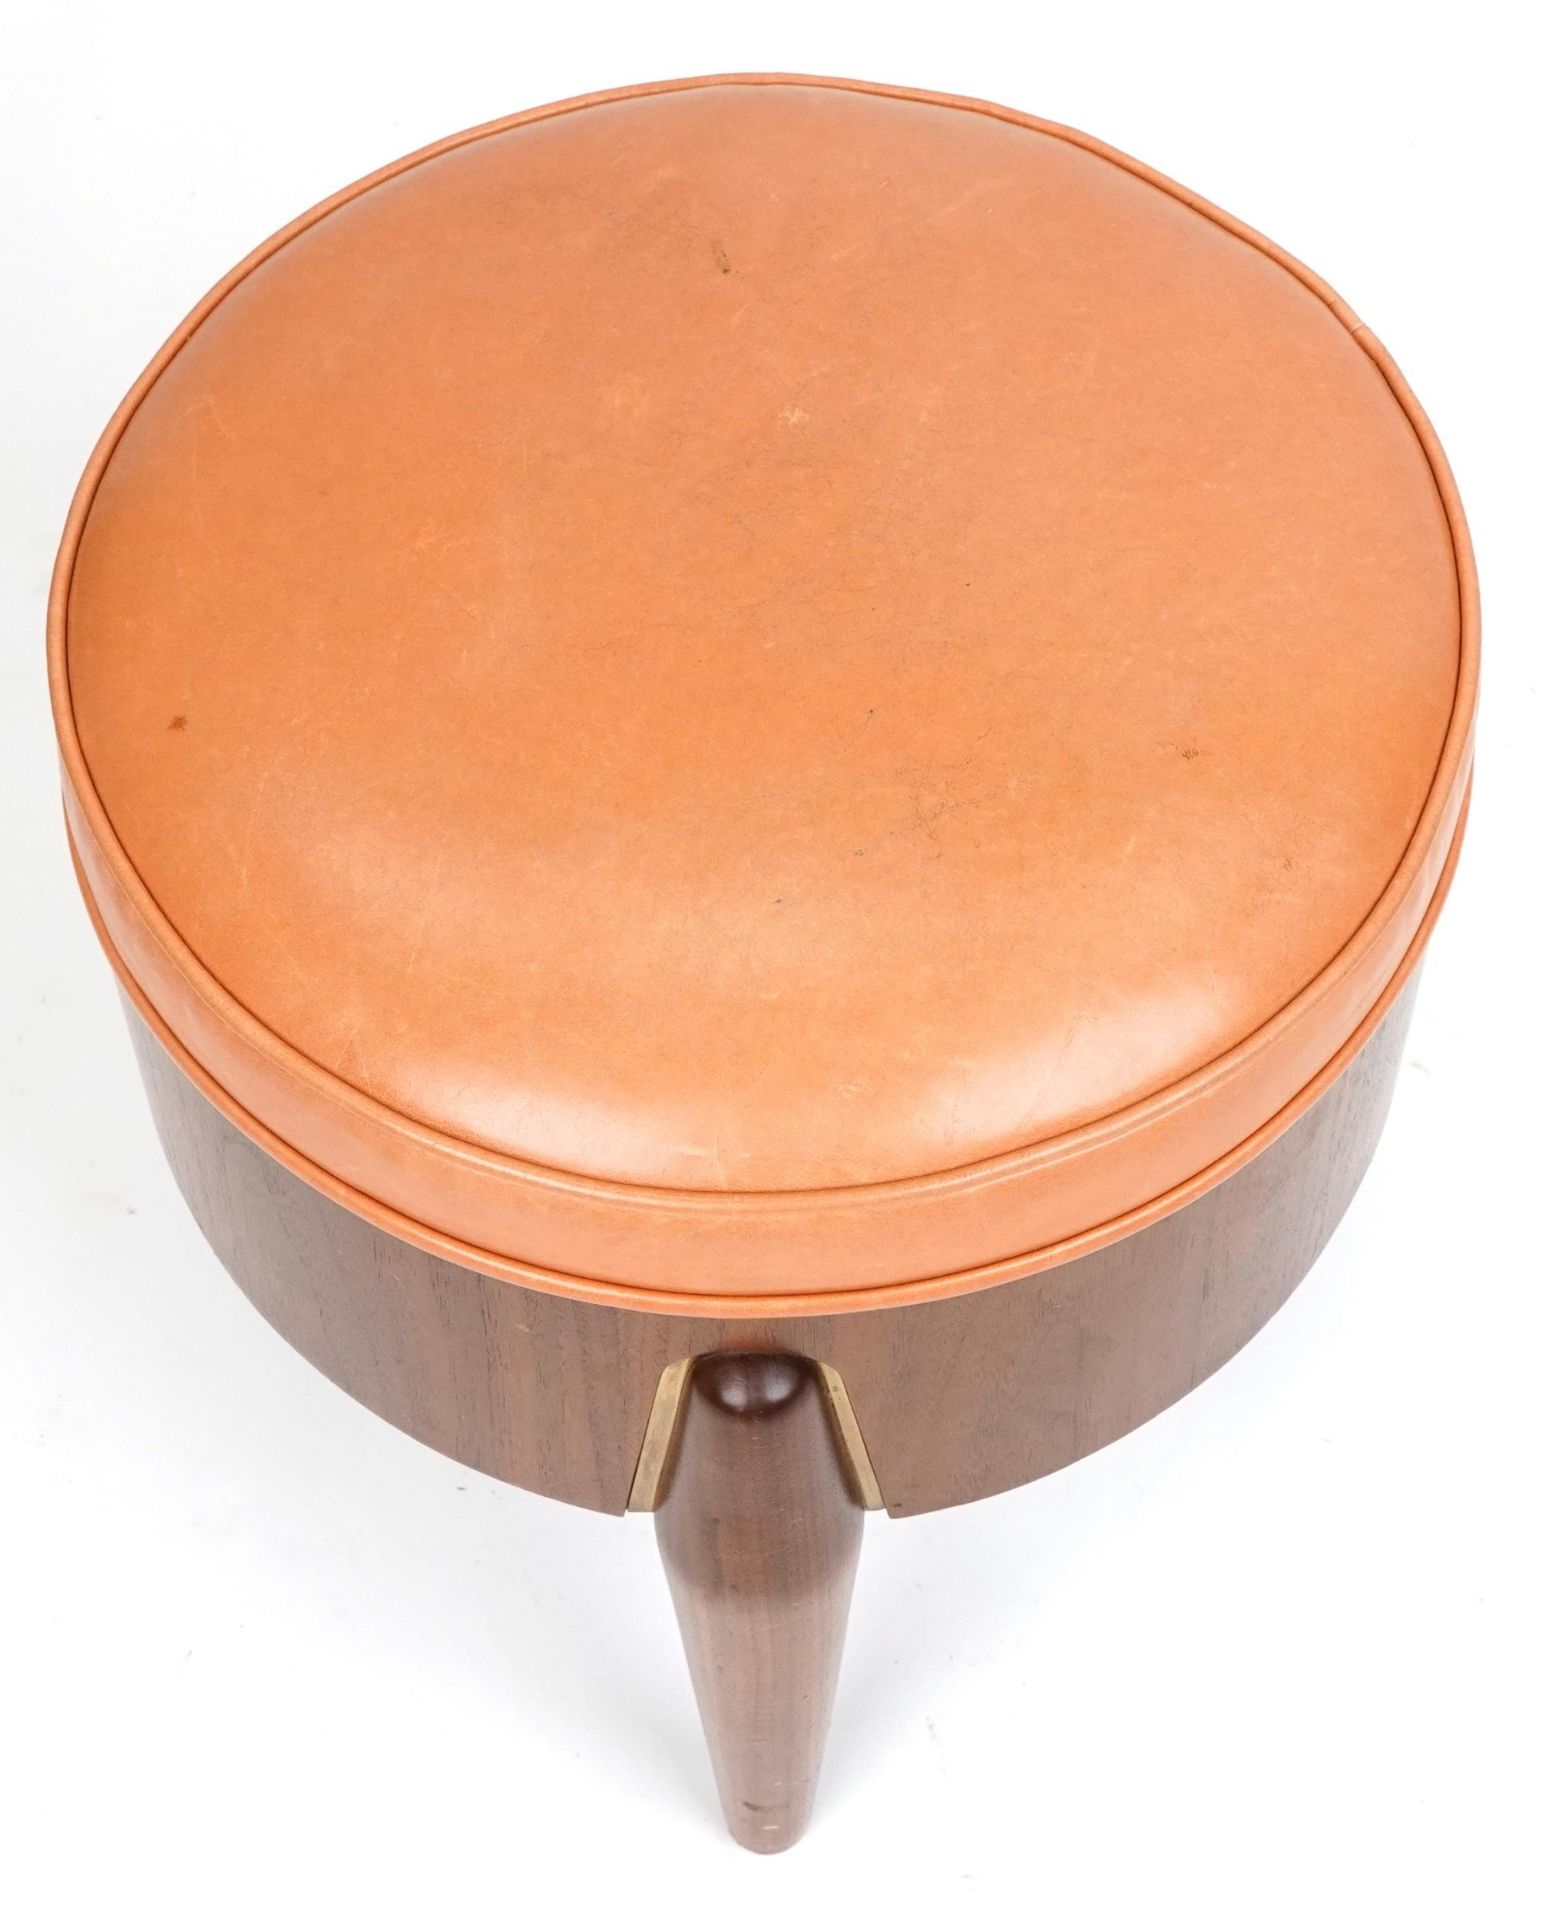 Scandinavian design hardwood three legged rocket stool with tan upholstered cushioned seat, 45cm H x - Image 2 of 3